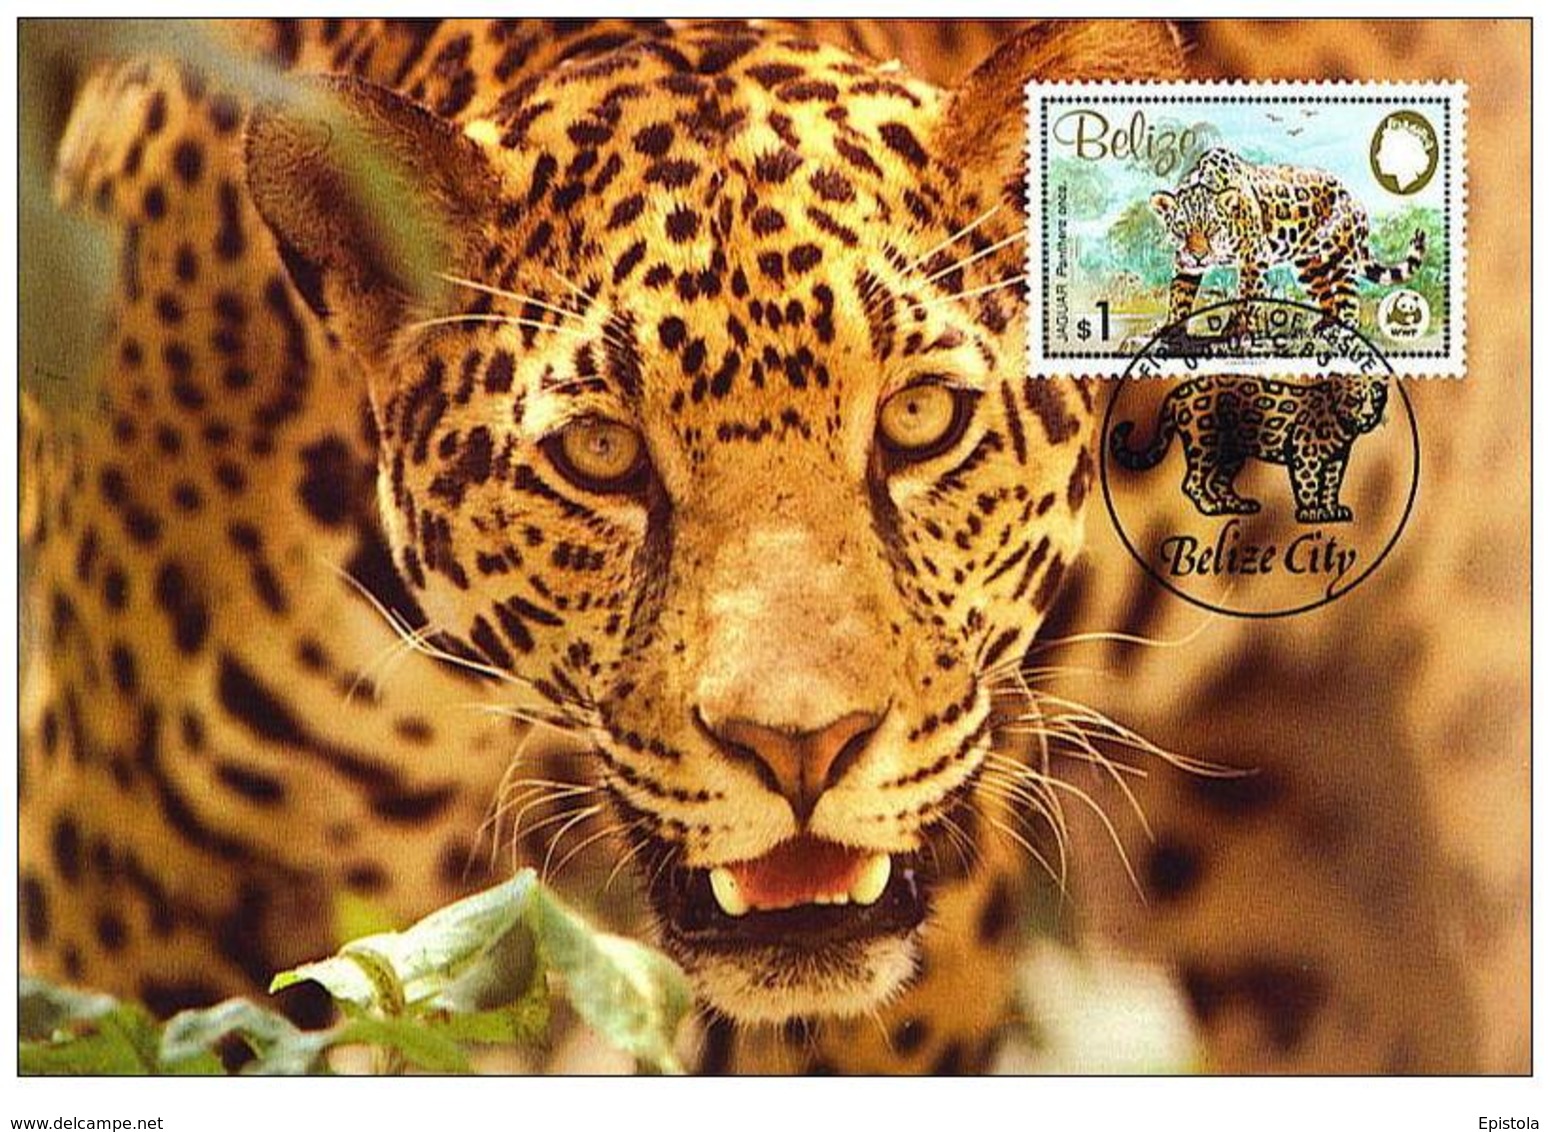 Belize : CM Carte Maximum Jaguar Panthera Onca Carnivore Felin Mammifere Amerique Animal WWF - Belize